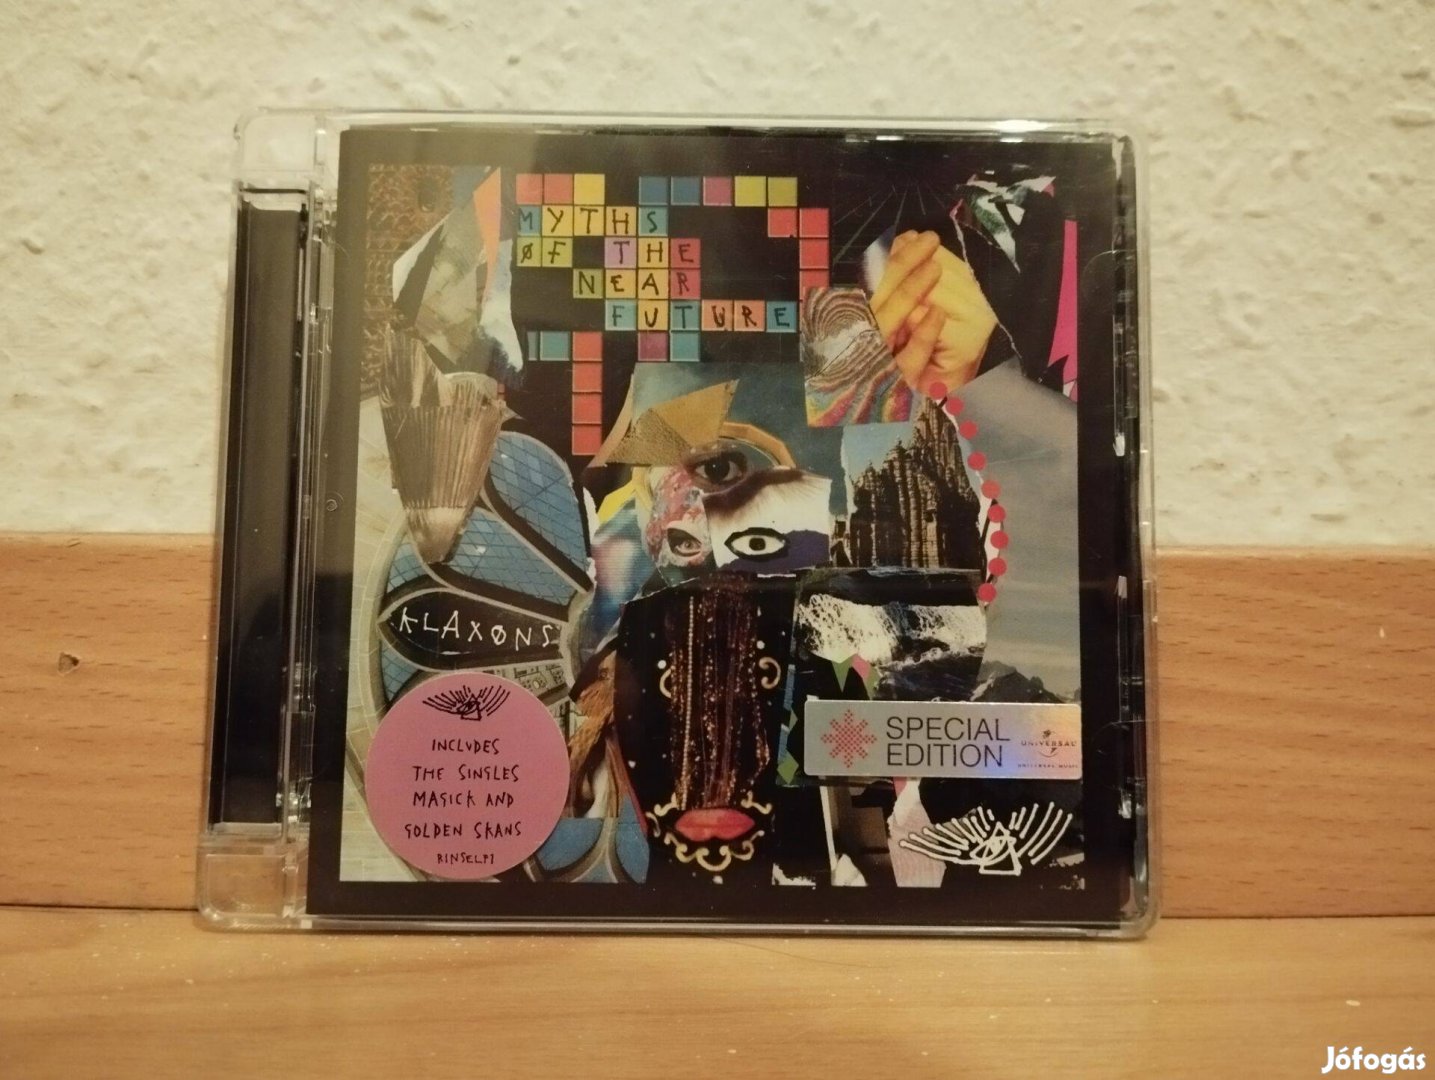 Klaxons - Myth Of The Near Future UK CD